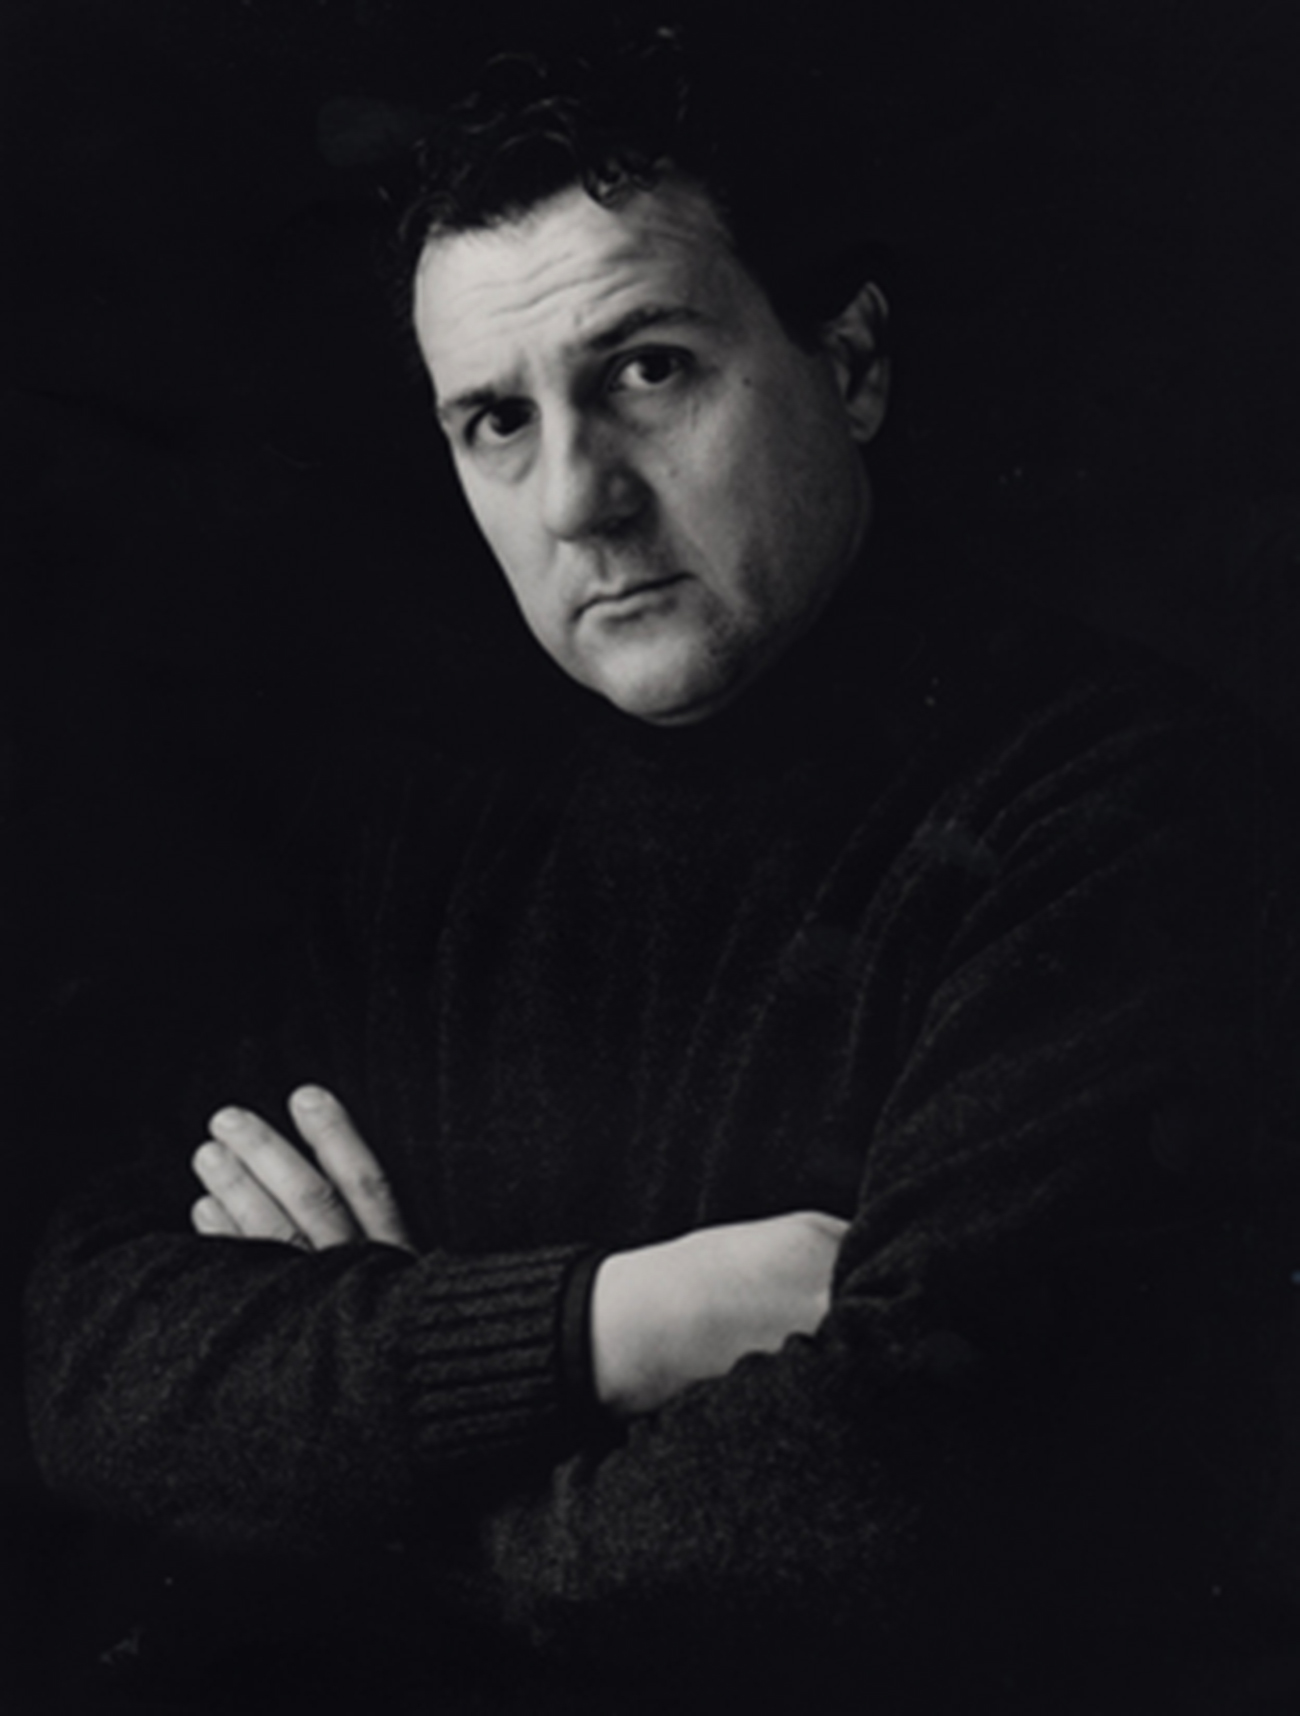 Franco Fossi